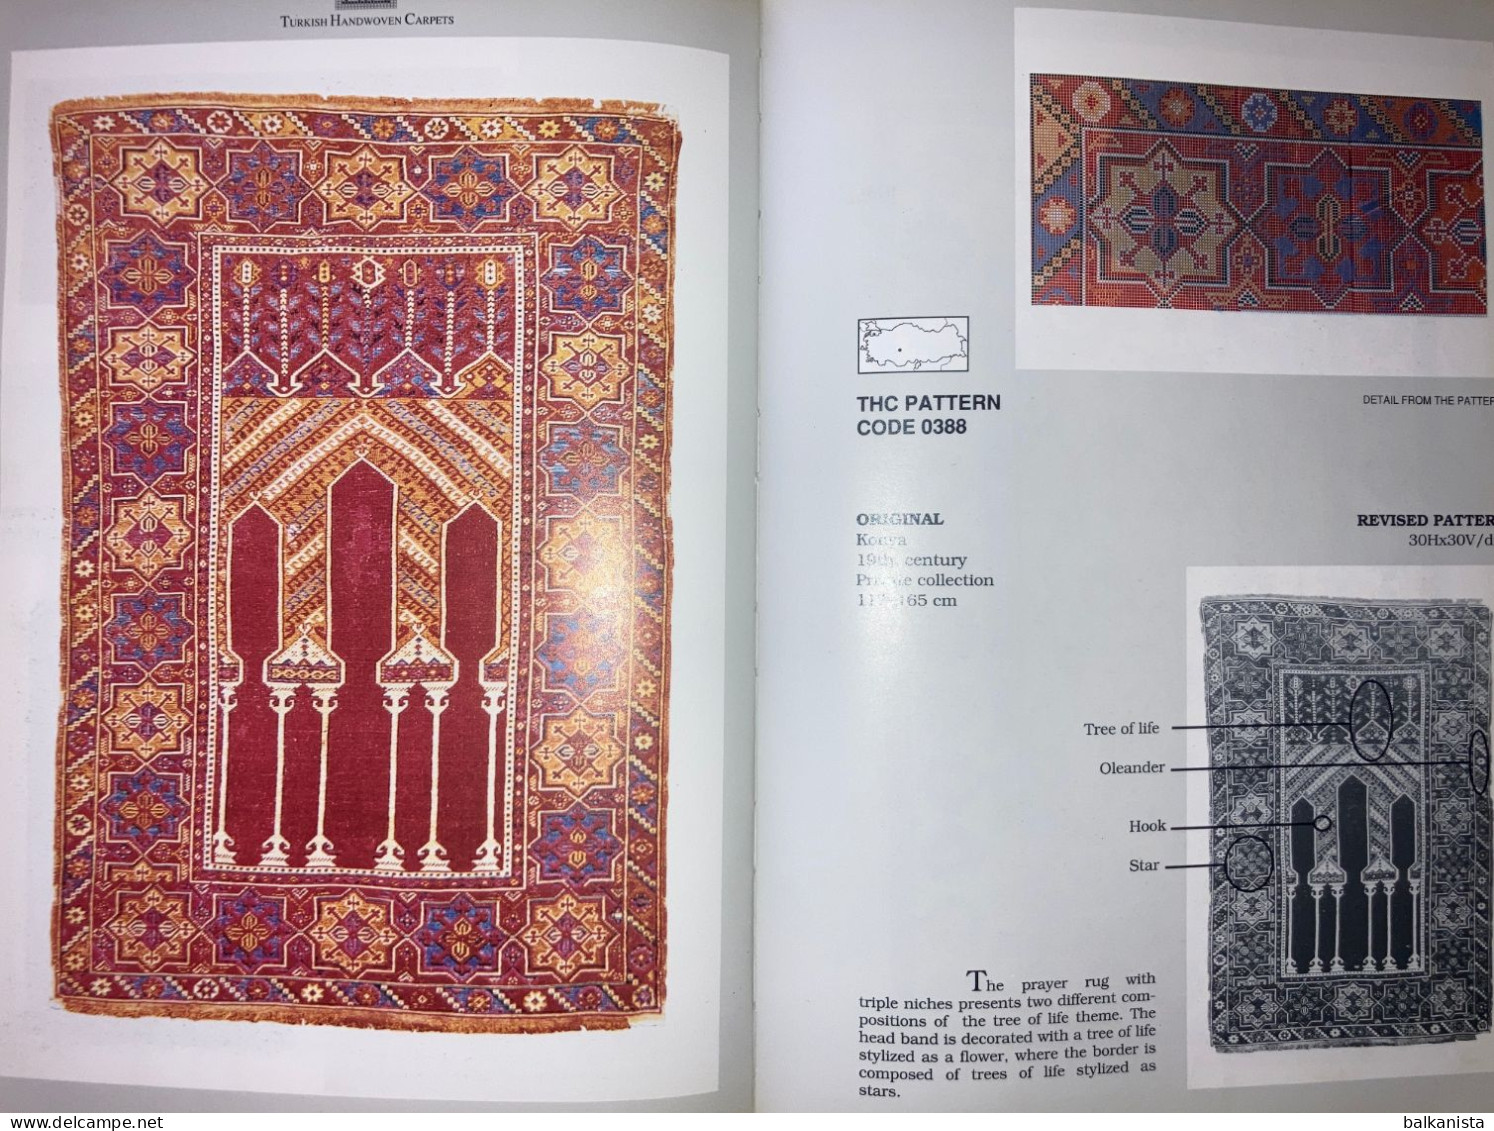 Turkish Handwoven Carpets 5 Book Set